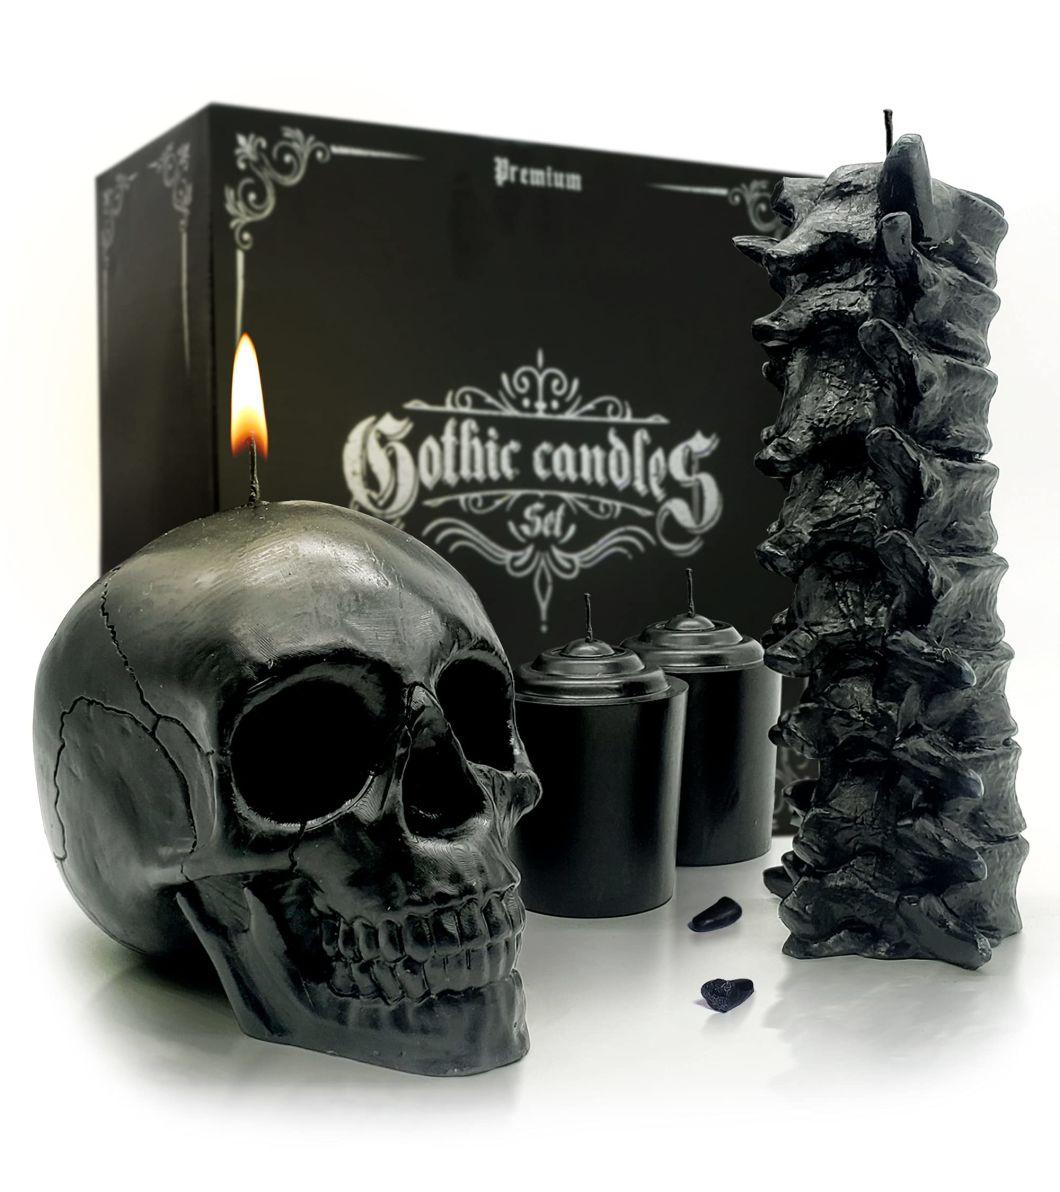 Spine & Skull Candle Set - Scented 4 Pack - Gothic Decor for Bedroom - Black Skull Decor for Home - Goth Room Decor